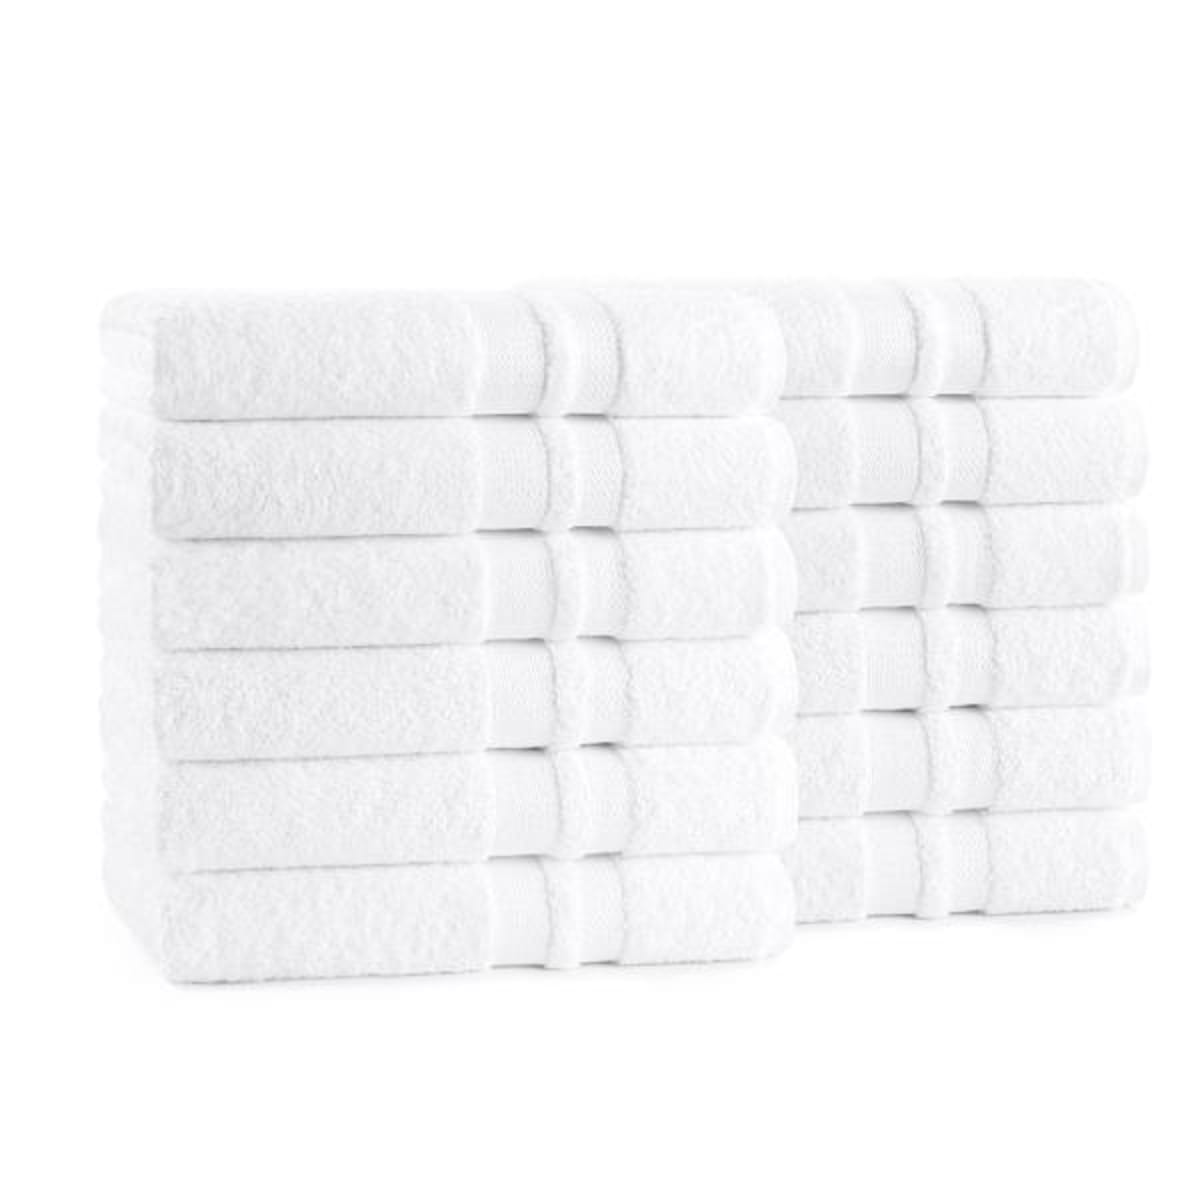 Welspun Welington Hand Towel, 16 x 30, White 4.5lb